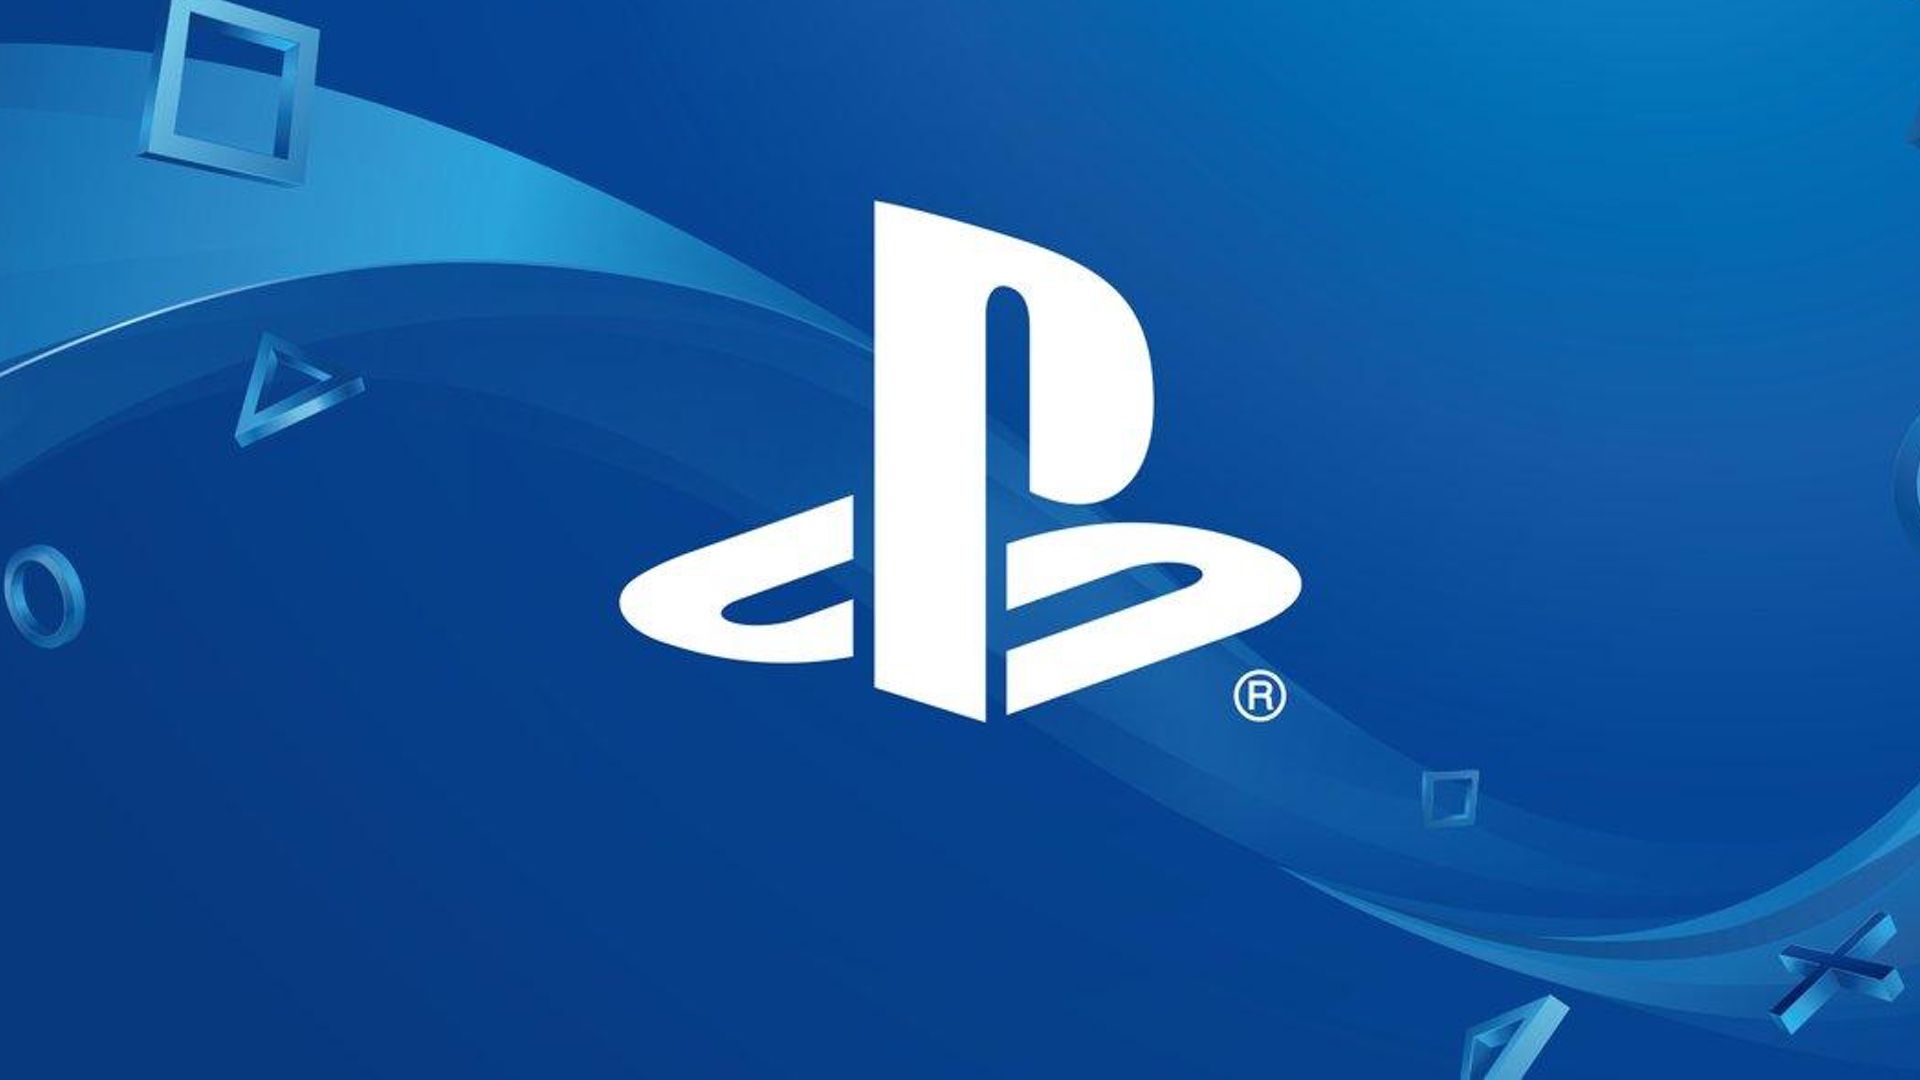 PlayStation Next-Gen PS5 E3 2020 Samsung NVMe SSD Sony Xbox Series X PAX East 2020 Coronavirus